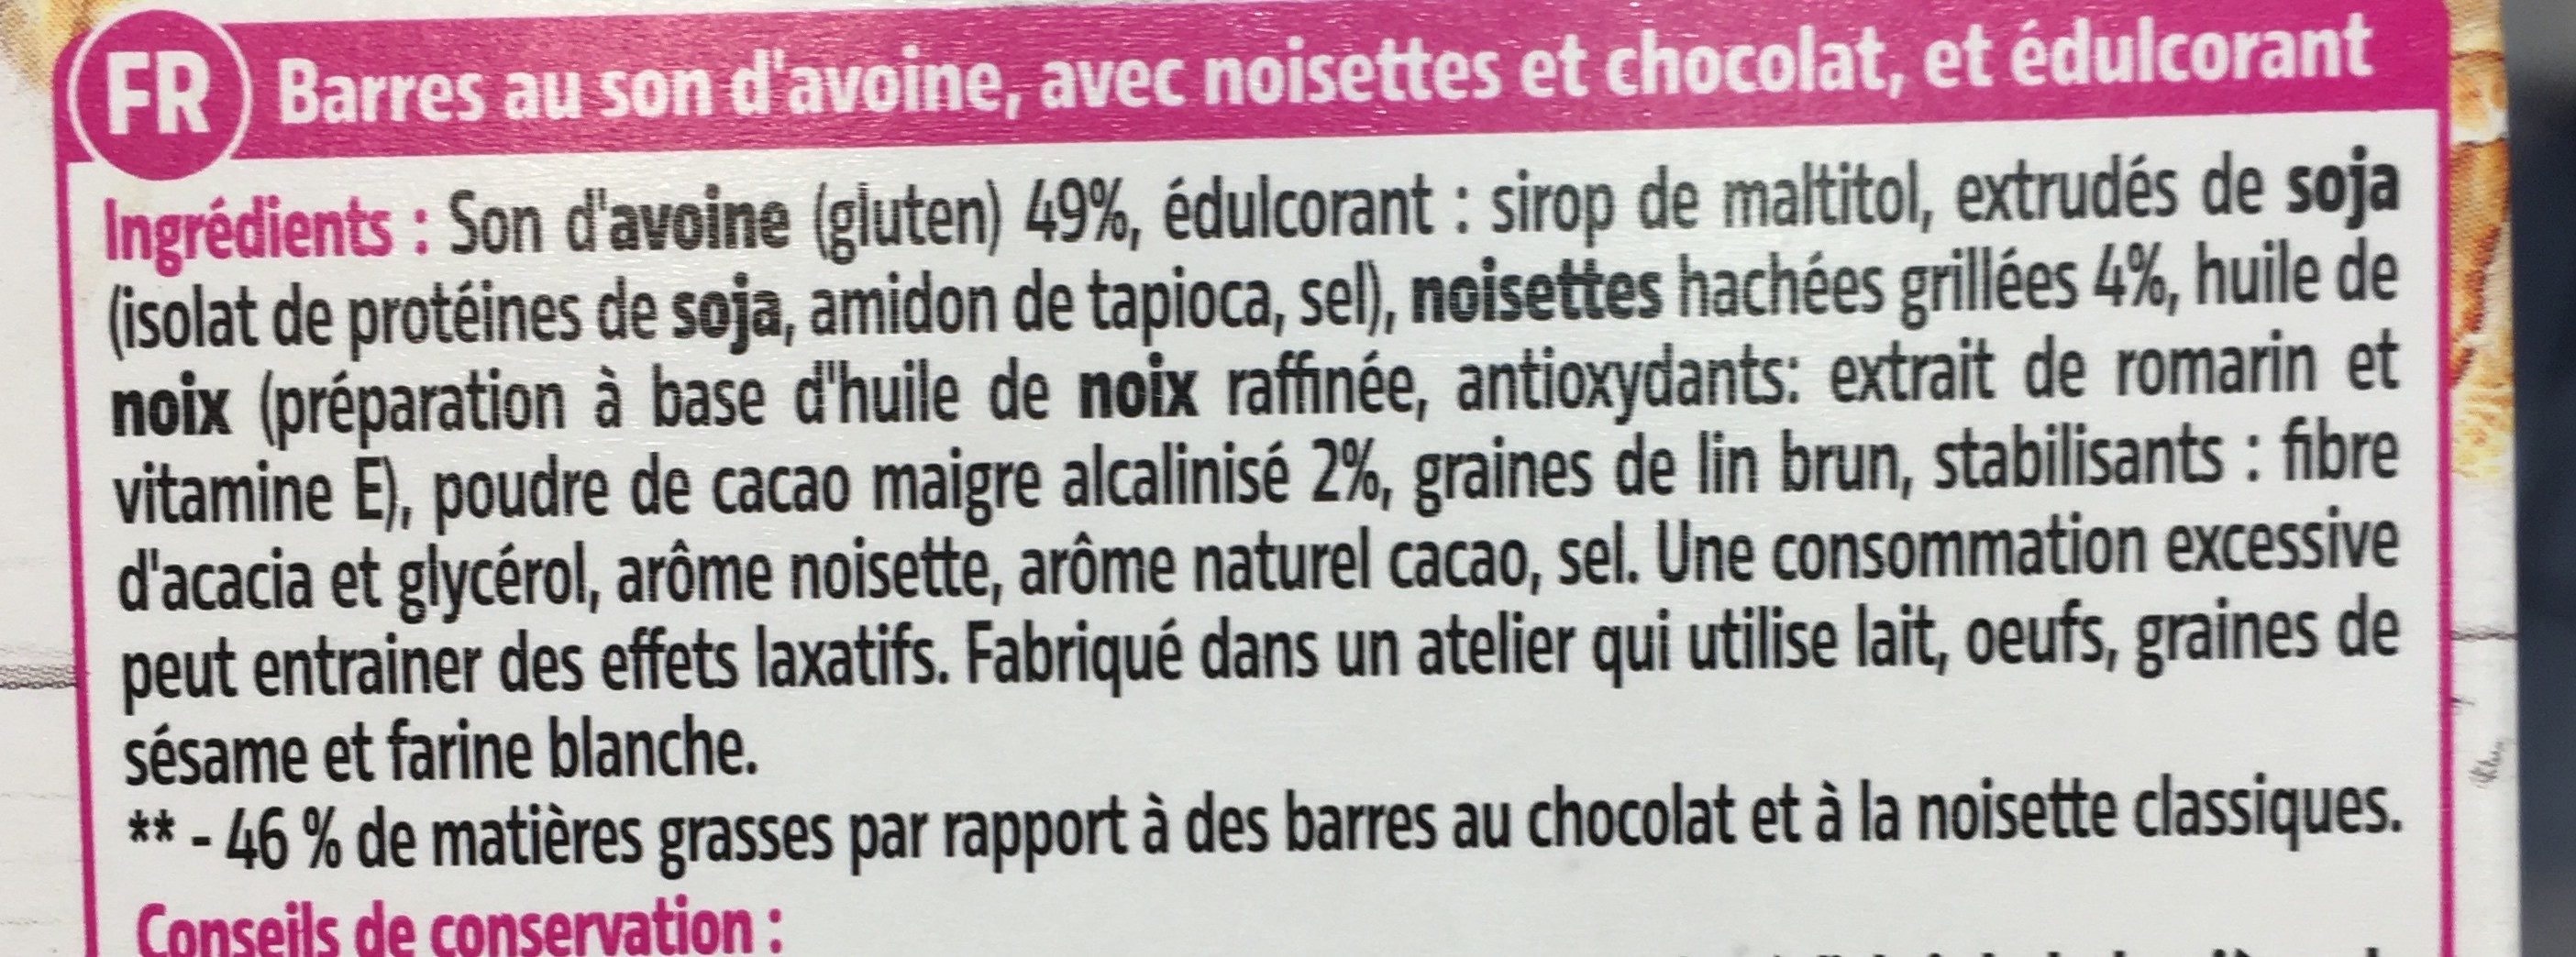 Barres au chocolat er noisettes - Ingredients - fr